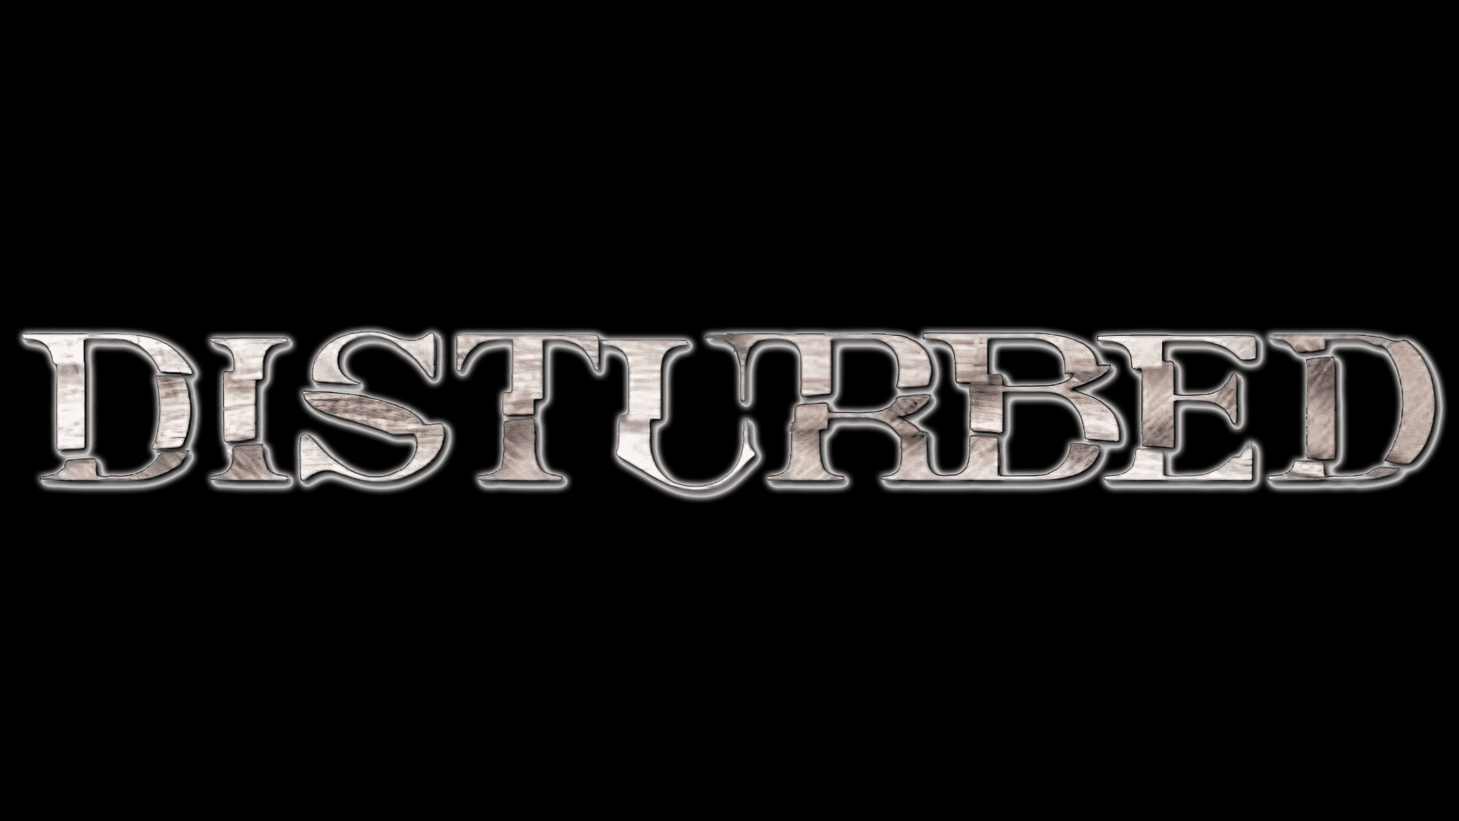 Disturbed sign 2010 2015